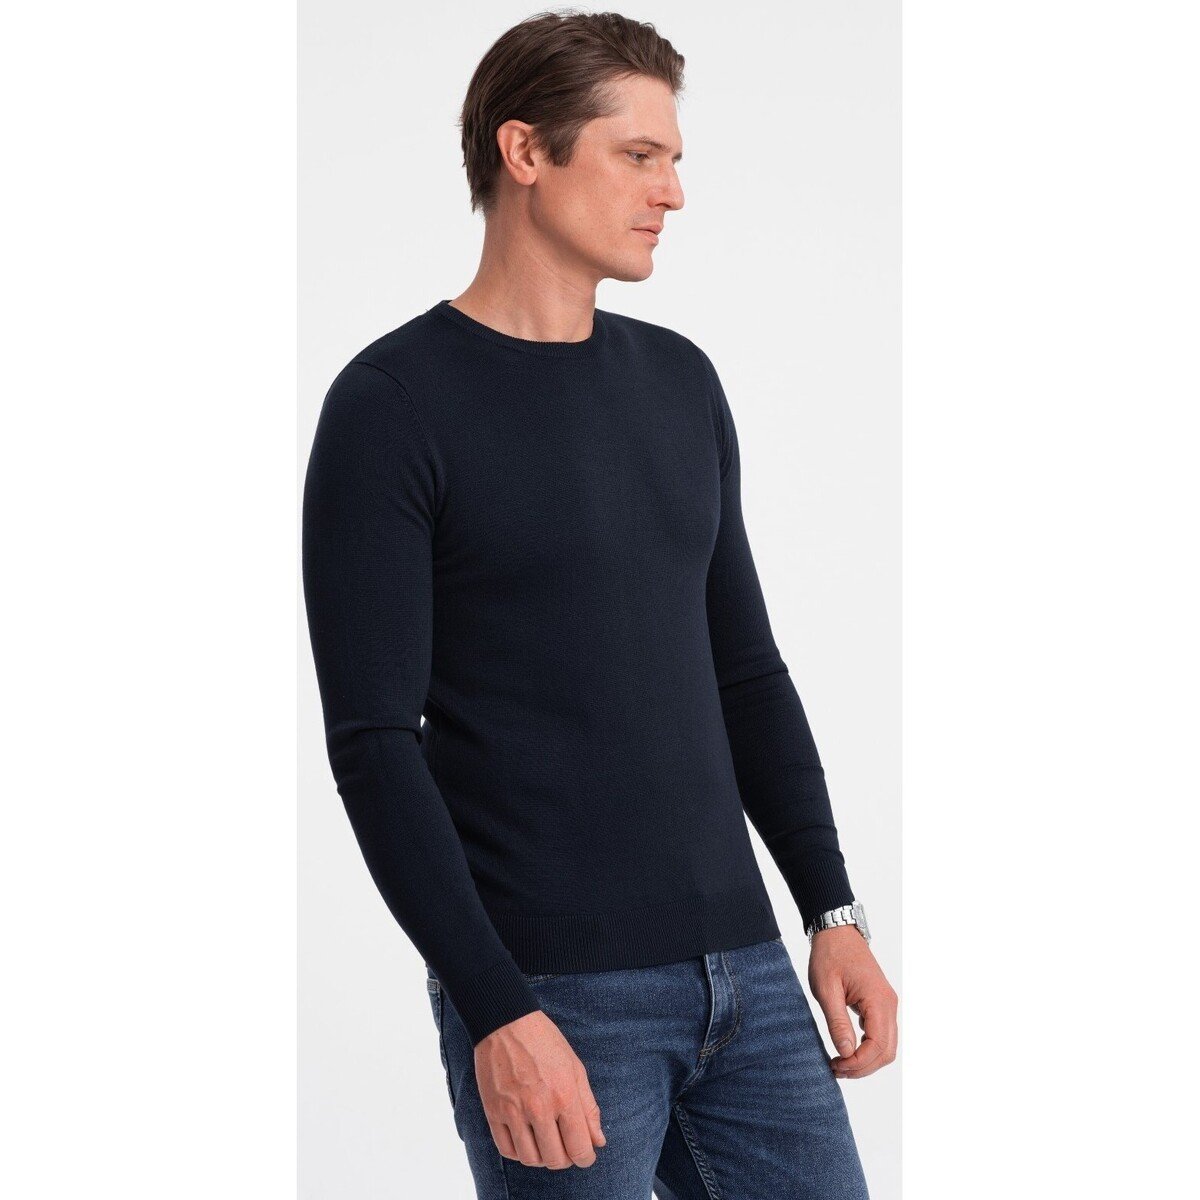 Ombre  Classic men apos;s sweater with round neckline - navy blue V9  ruznobarevne